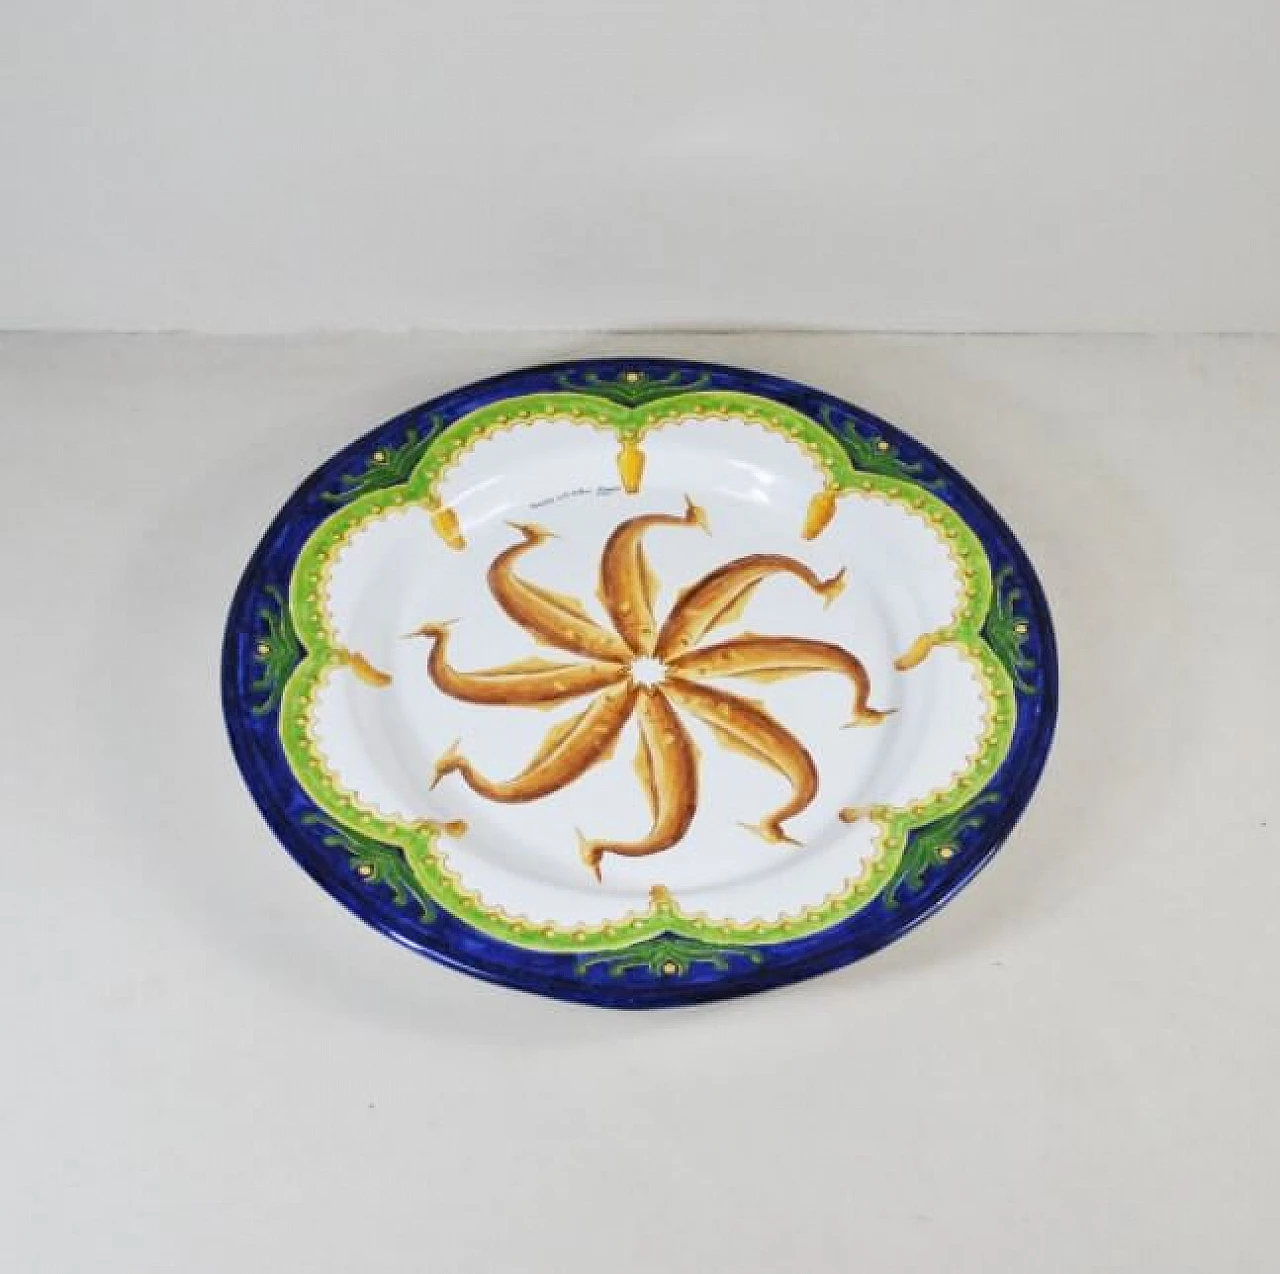 Decorative ceramic plate by Tarshito, 2000 1219720